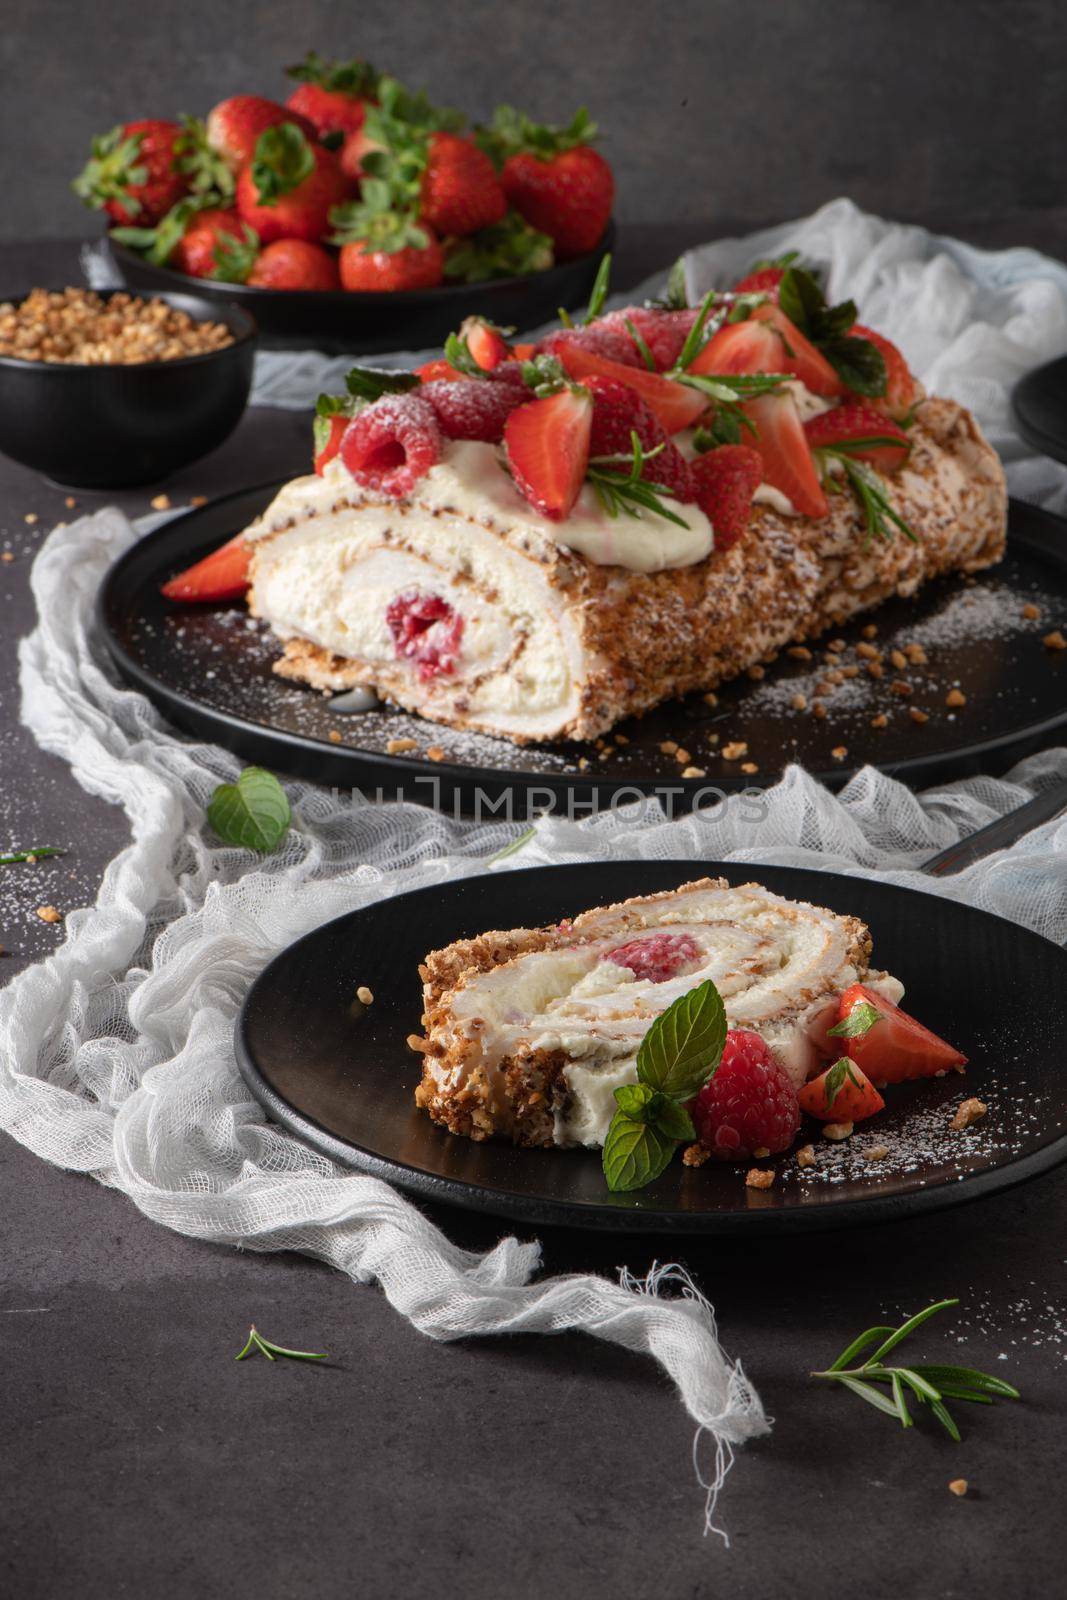 Meringue roll cake with cream, raspberries. Roulade, summer dessert served in ceramic plate.